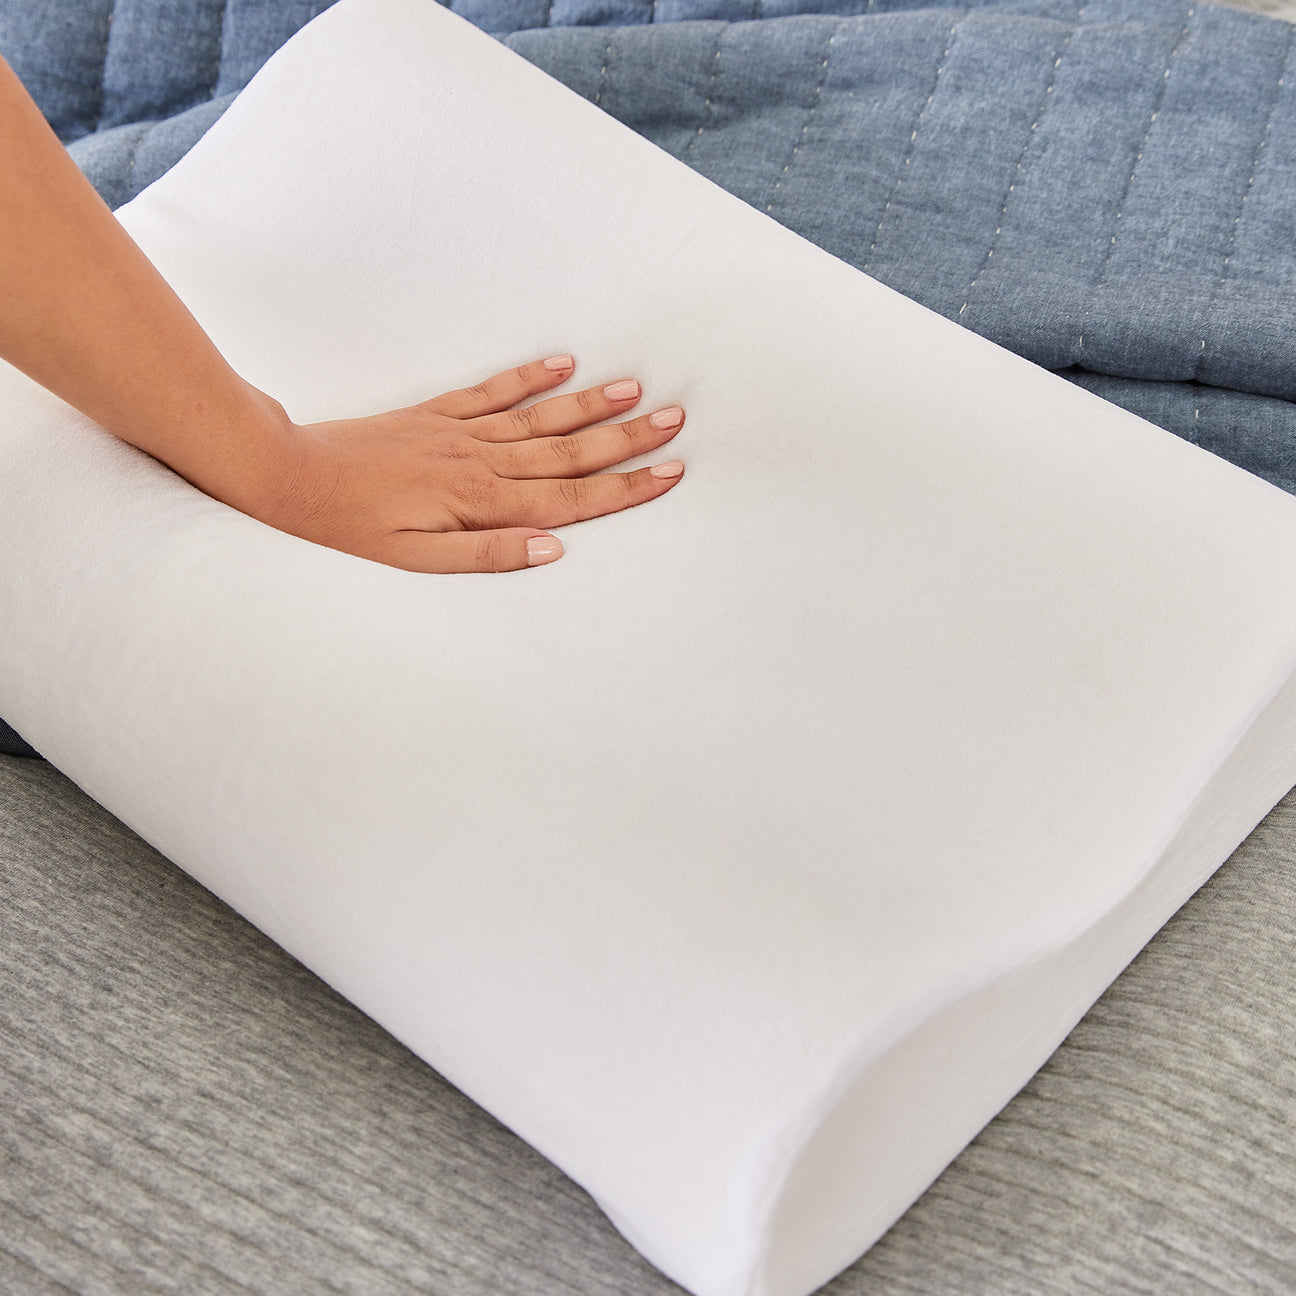 Originals Contour Gel Cooling Memory Foam Pillow